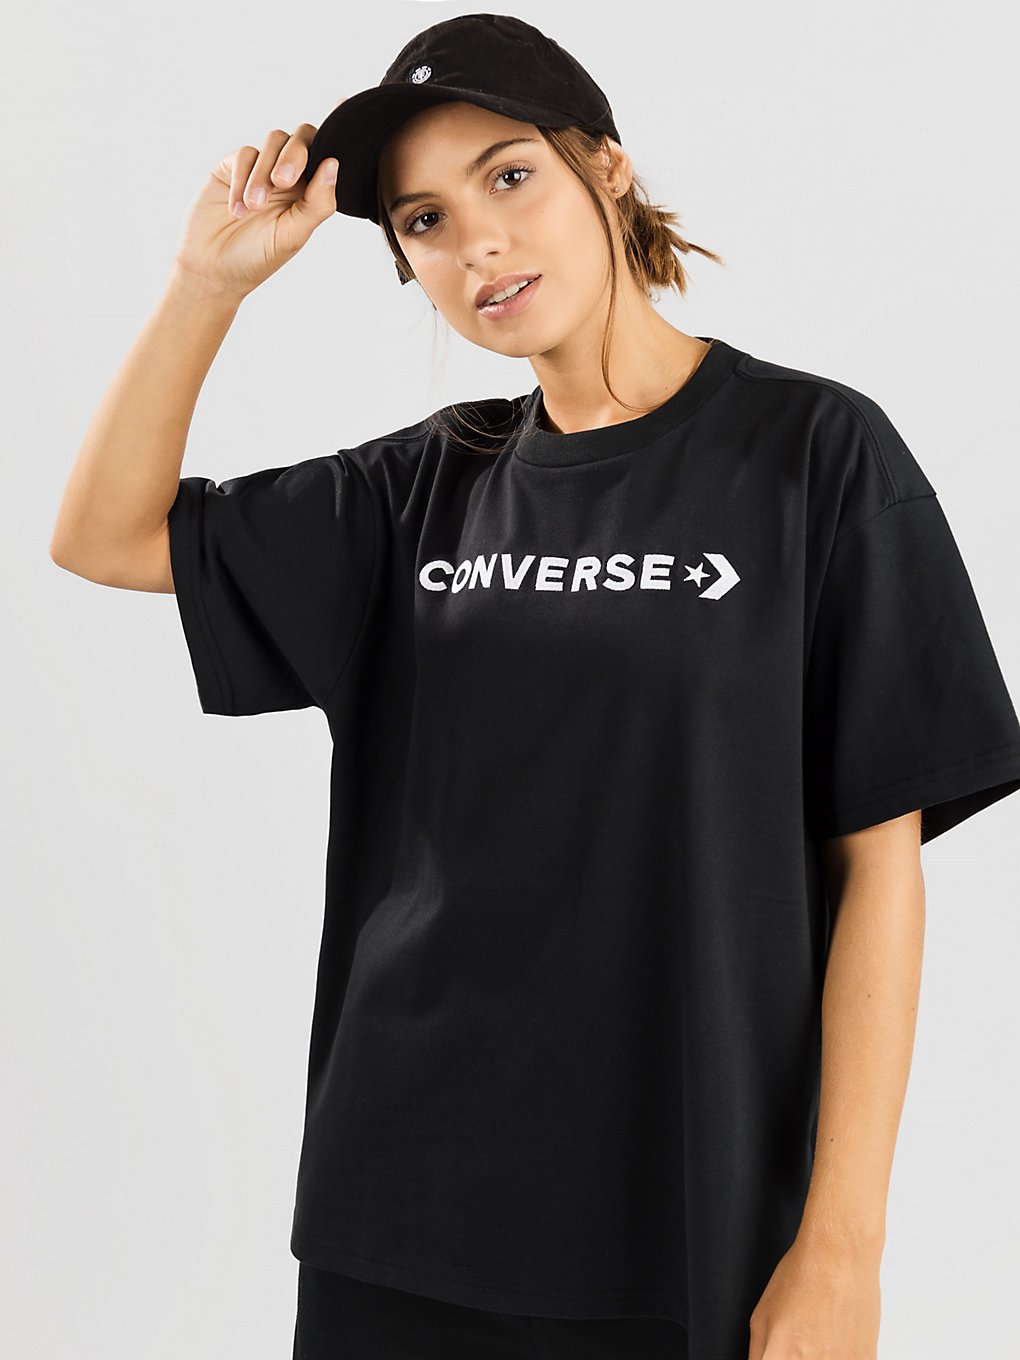 Converse Wordmark Oversized T-Shirt black kaufen